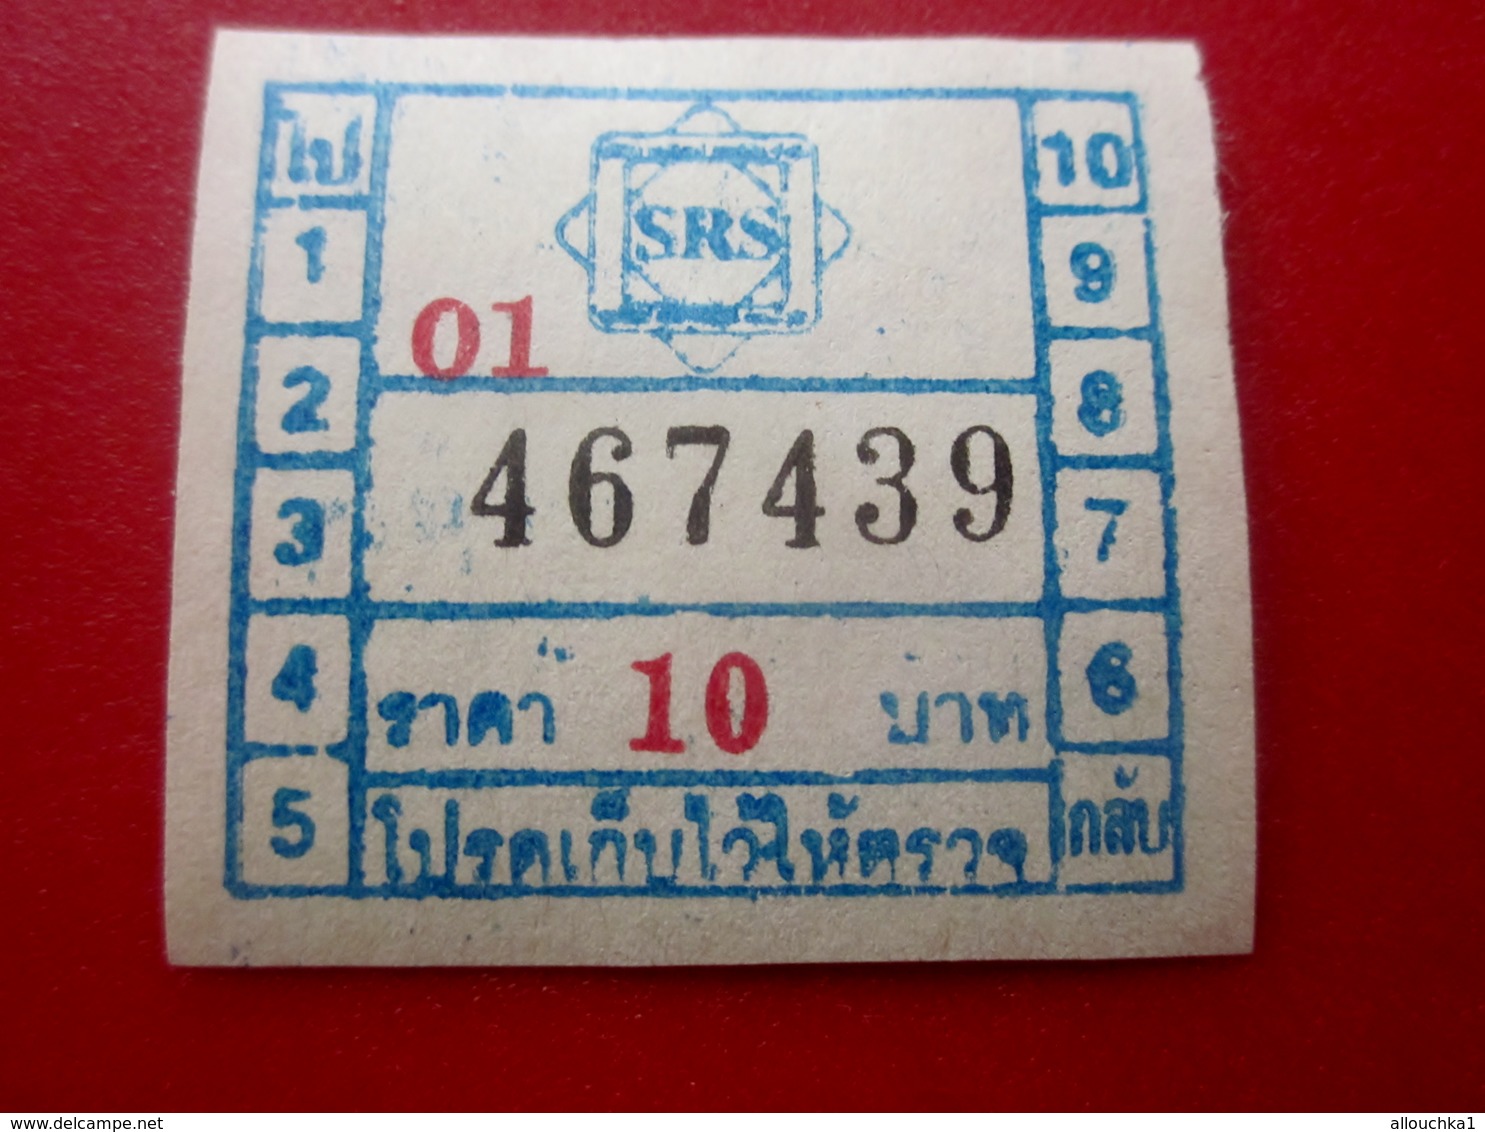 THAILAND THAILANDE -Boleto De Tren -Titre De Transport Billet Ticket-Tramway,Bus,Autobus,Railway,Métro - Monde